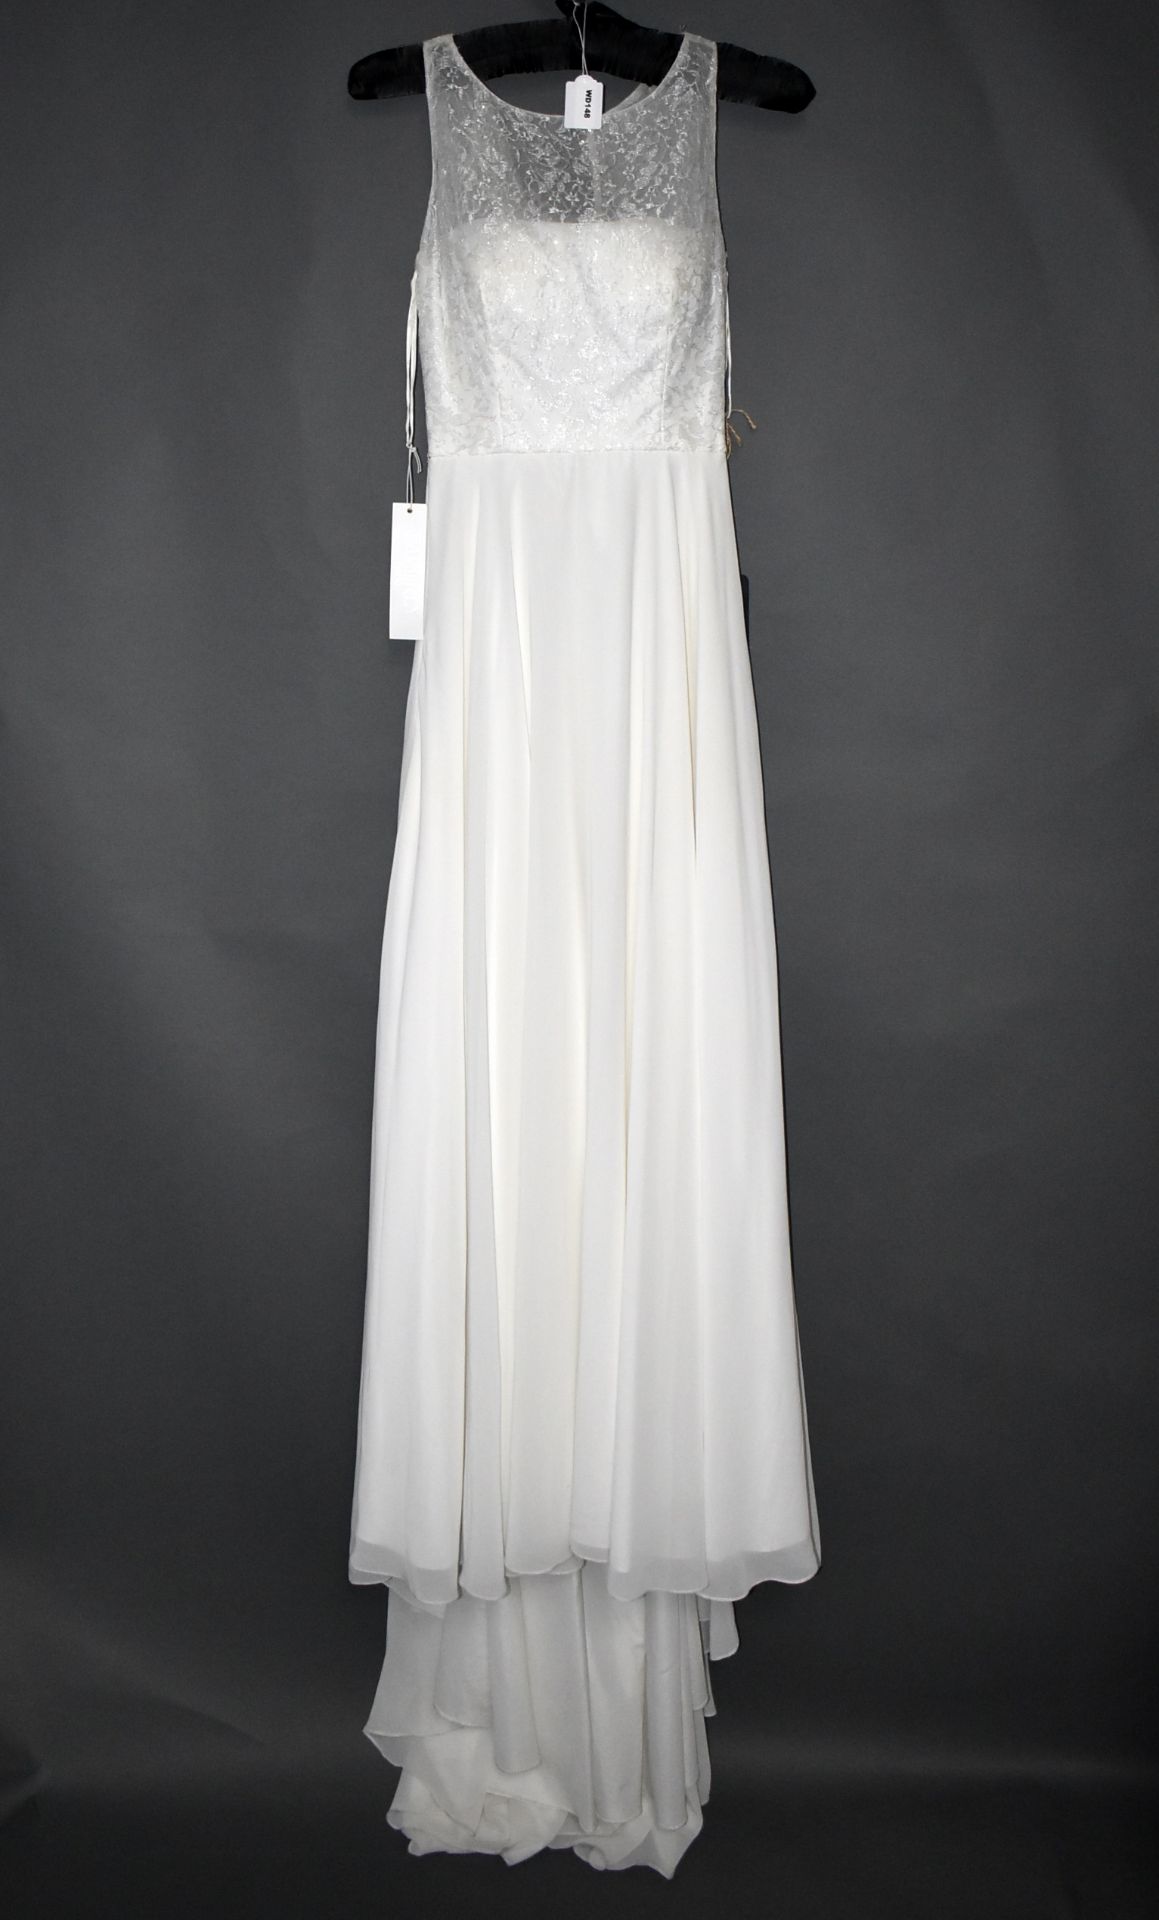 1 x WHITE ROSE Chiffon And Lace Overlay Designer Wedding Dress Bridal Gown RRP £1,050 UK 12